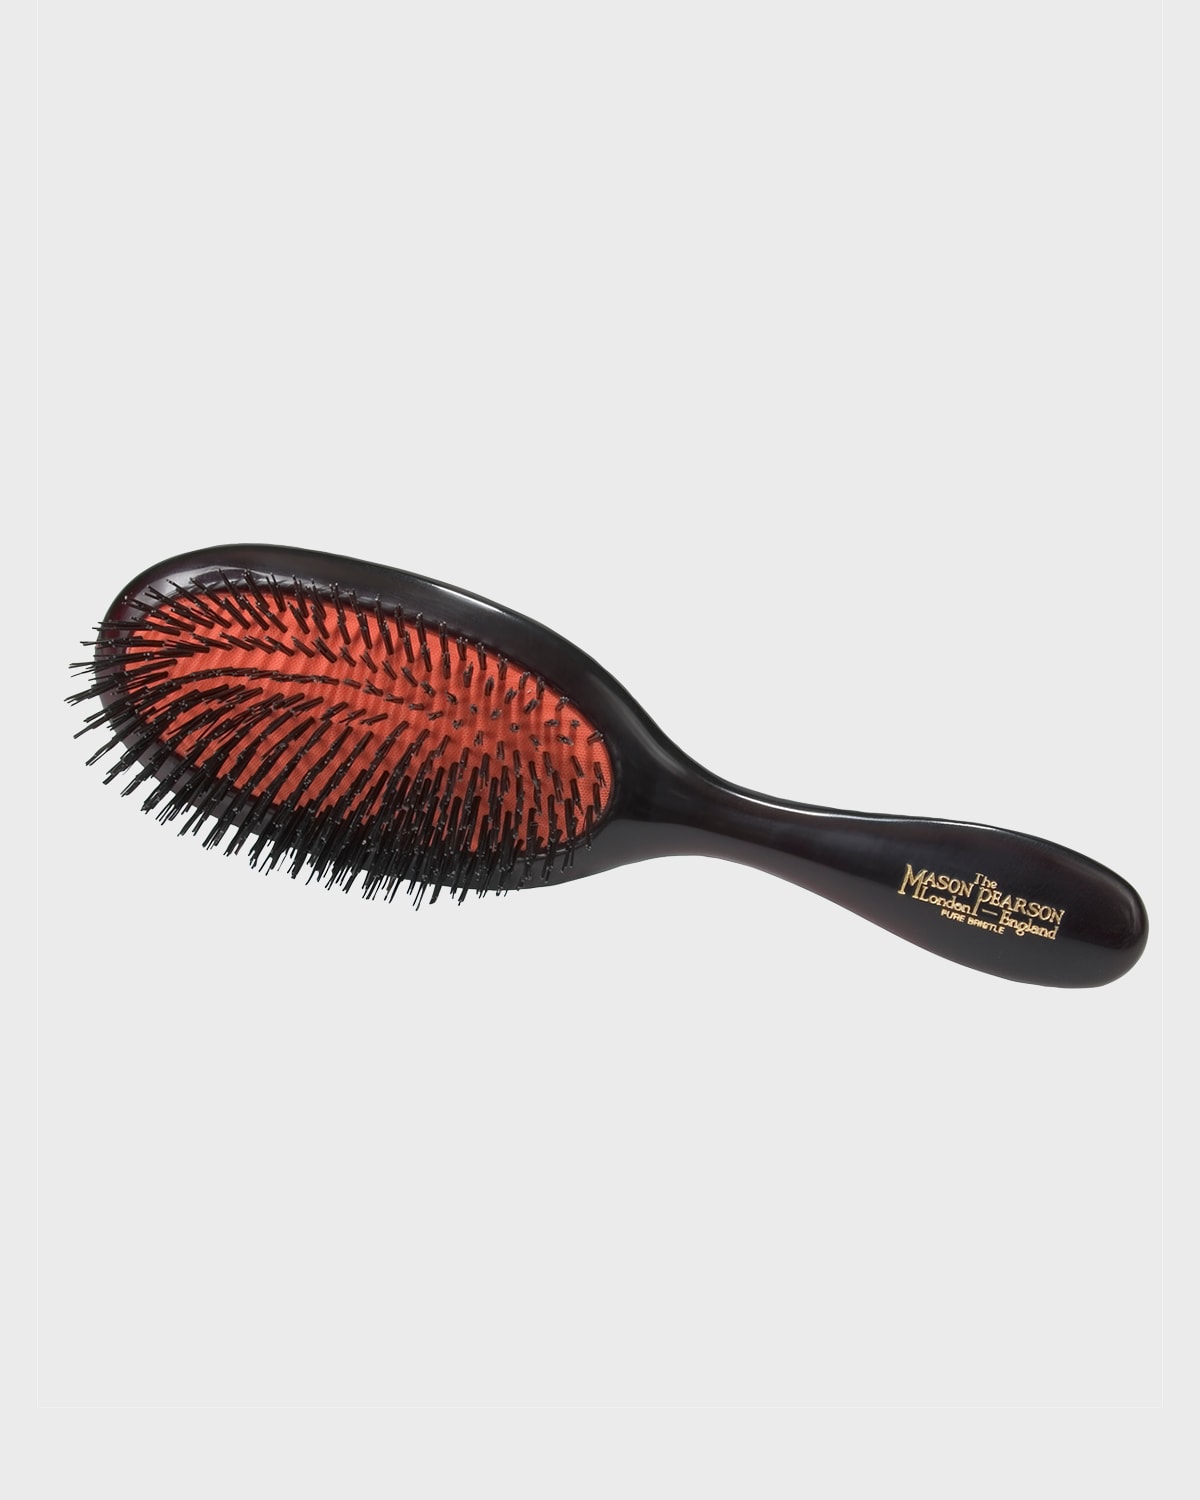 Handy Boar Bristle Hair Brush